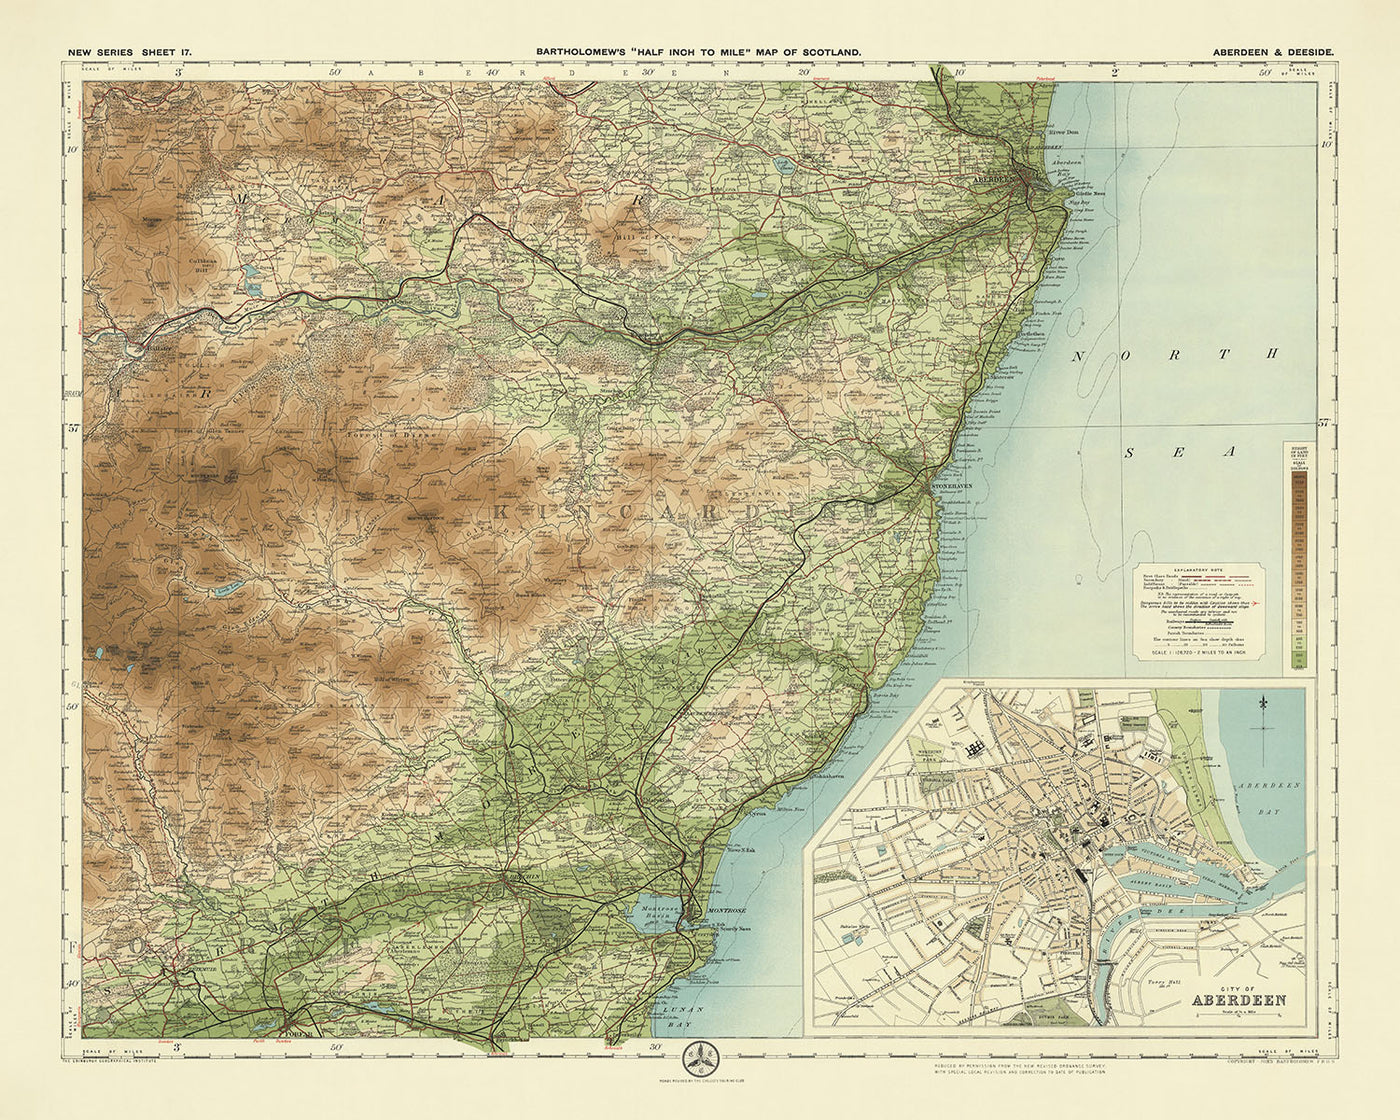 Antiguo mapa OS de Aberdeen y Deeside, Aberdeenshire por Bartholomew, 1901: Aberdeen, río Dee, Bennachie, castillo de Dunnottar, lago de Skene, costa del Mar del Norte